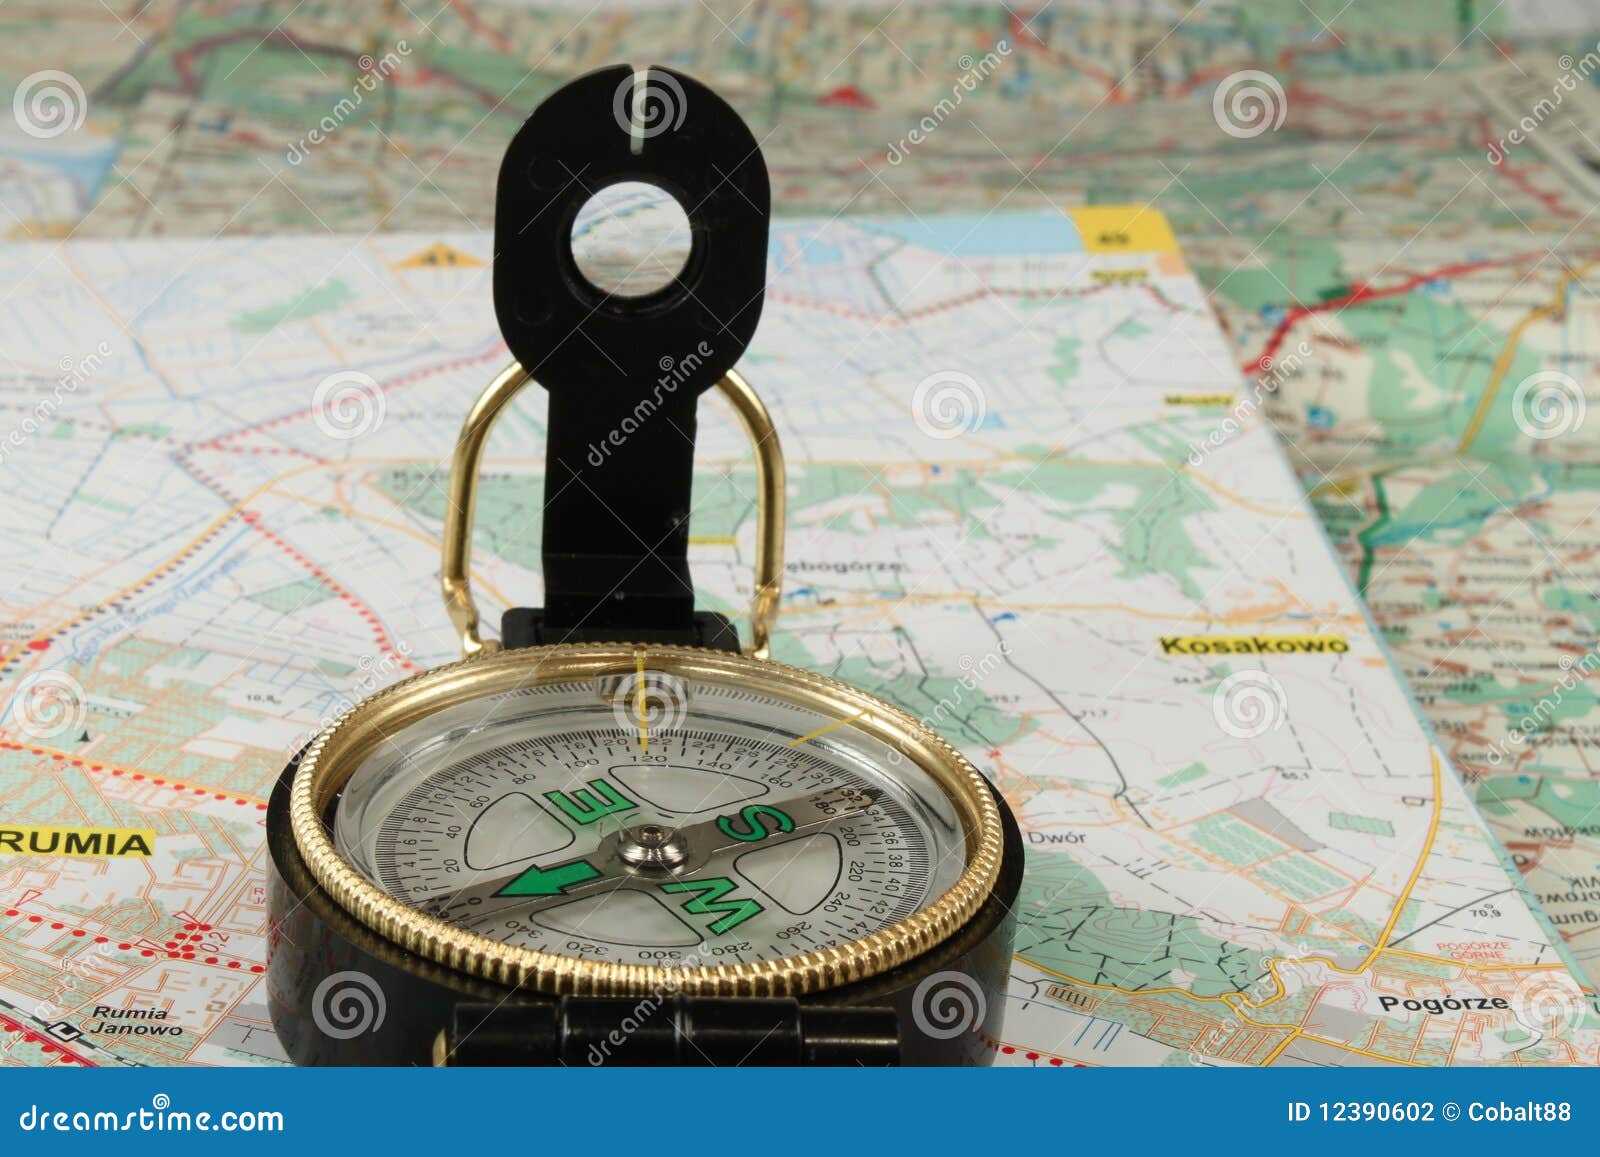 Compass Map 12390602 